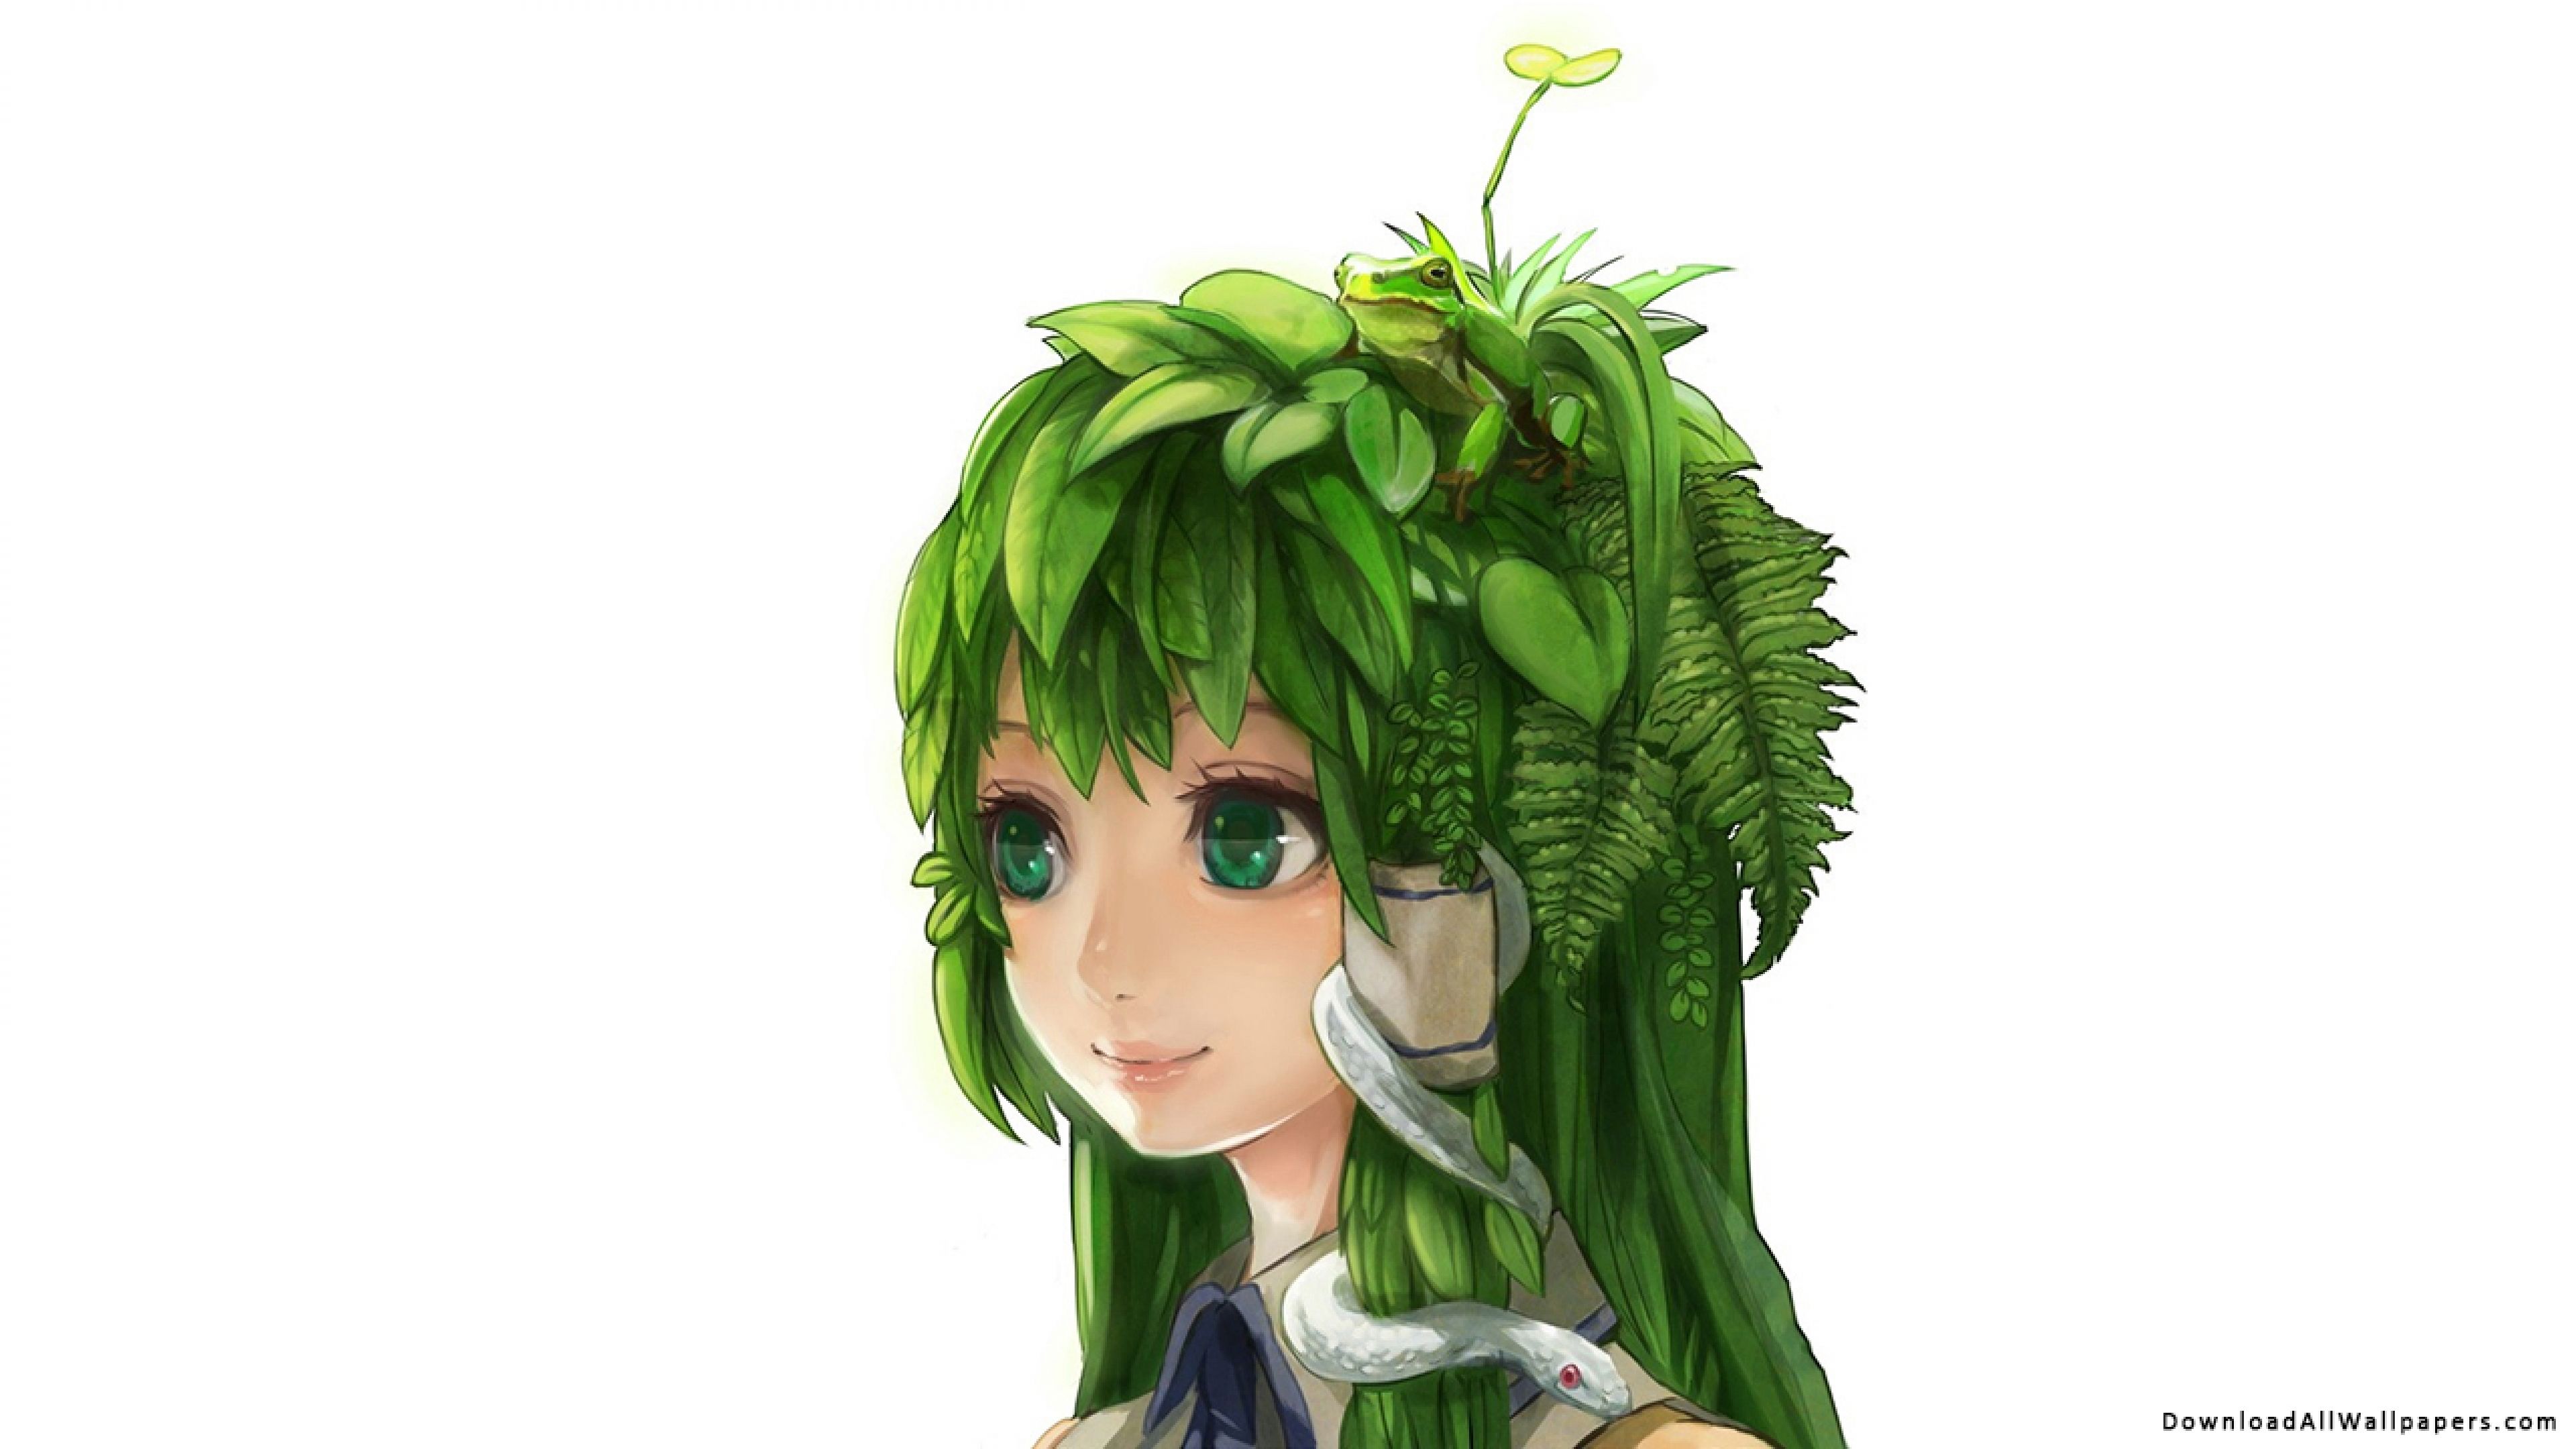 Nature Anime Girl, Nature, Anime Girl, Anime, Green, Plant, Grass